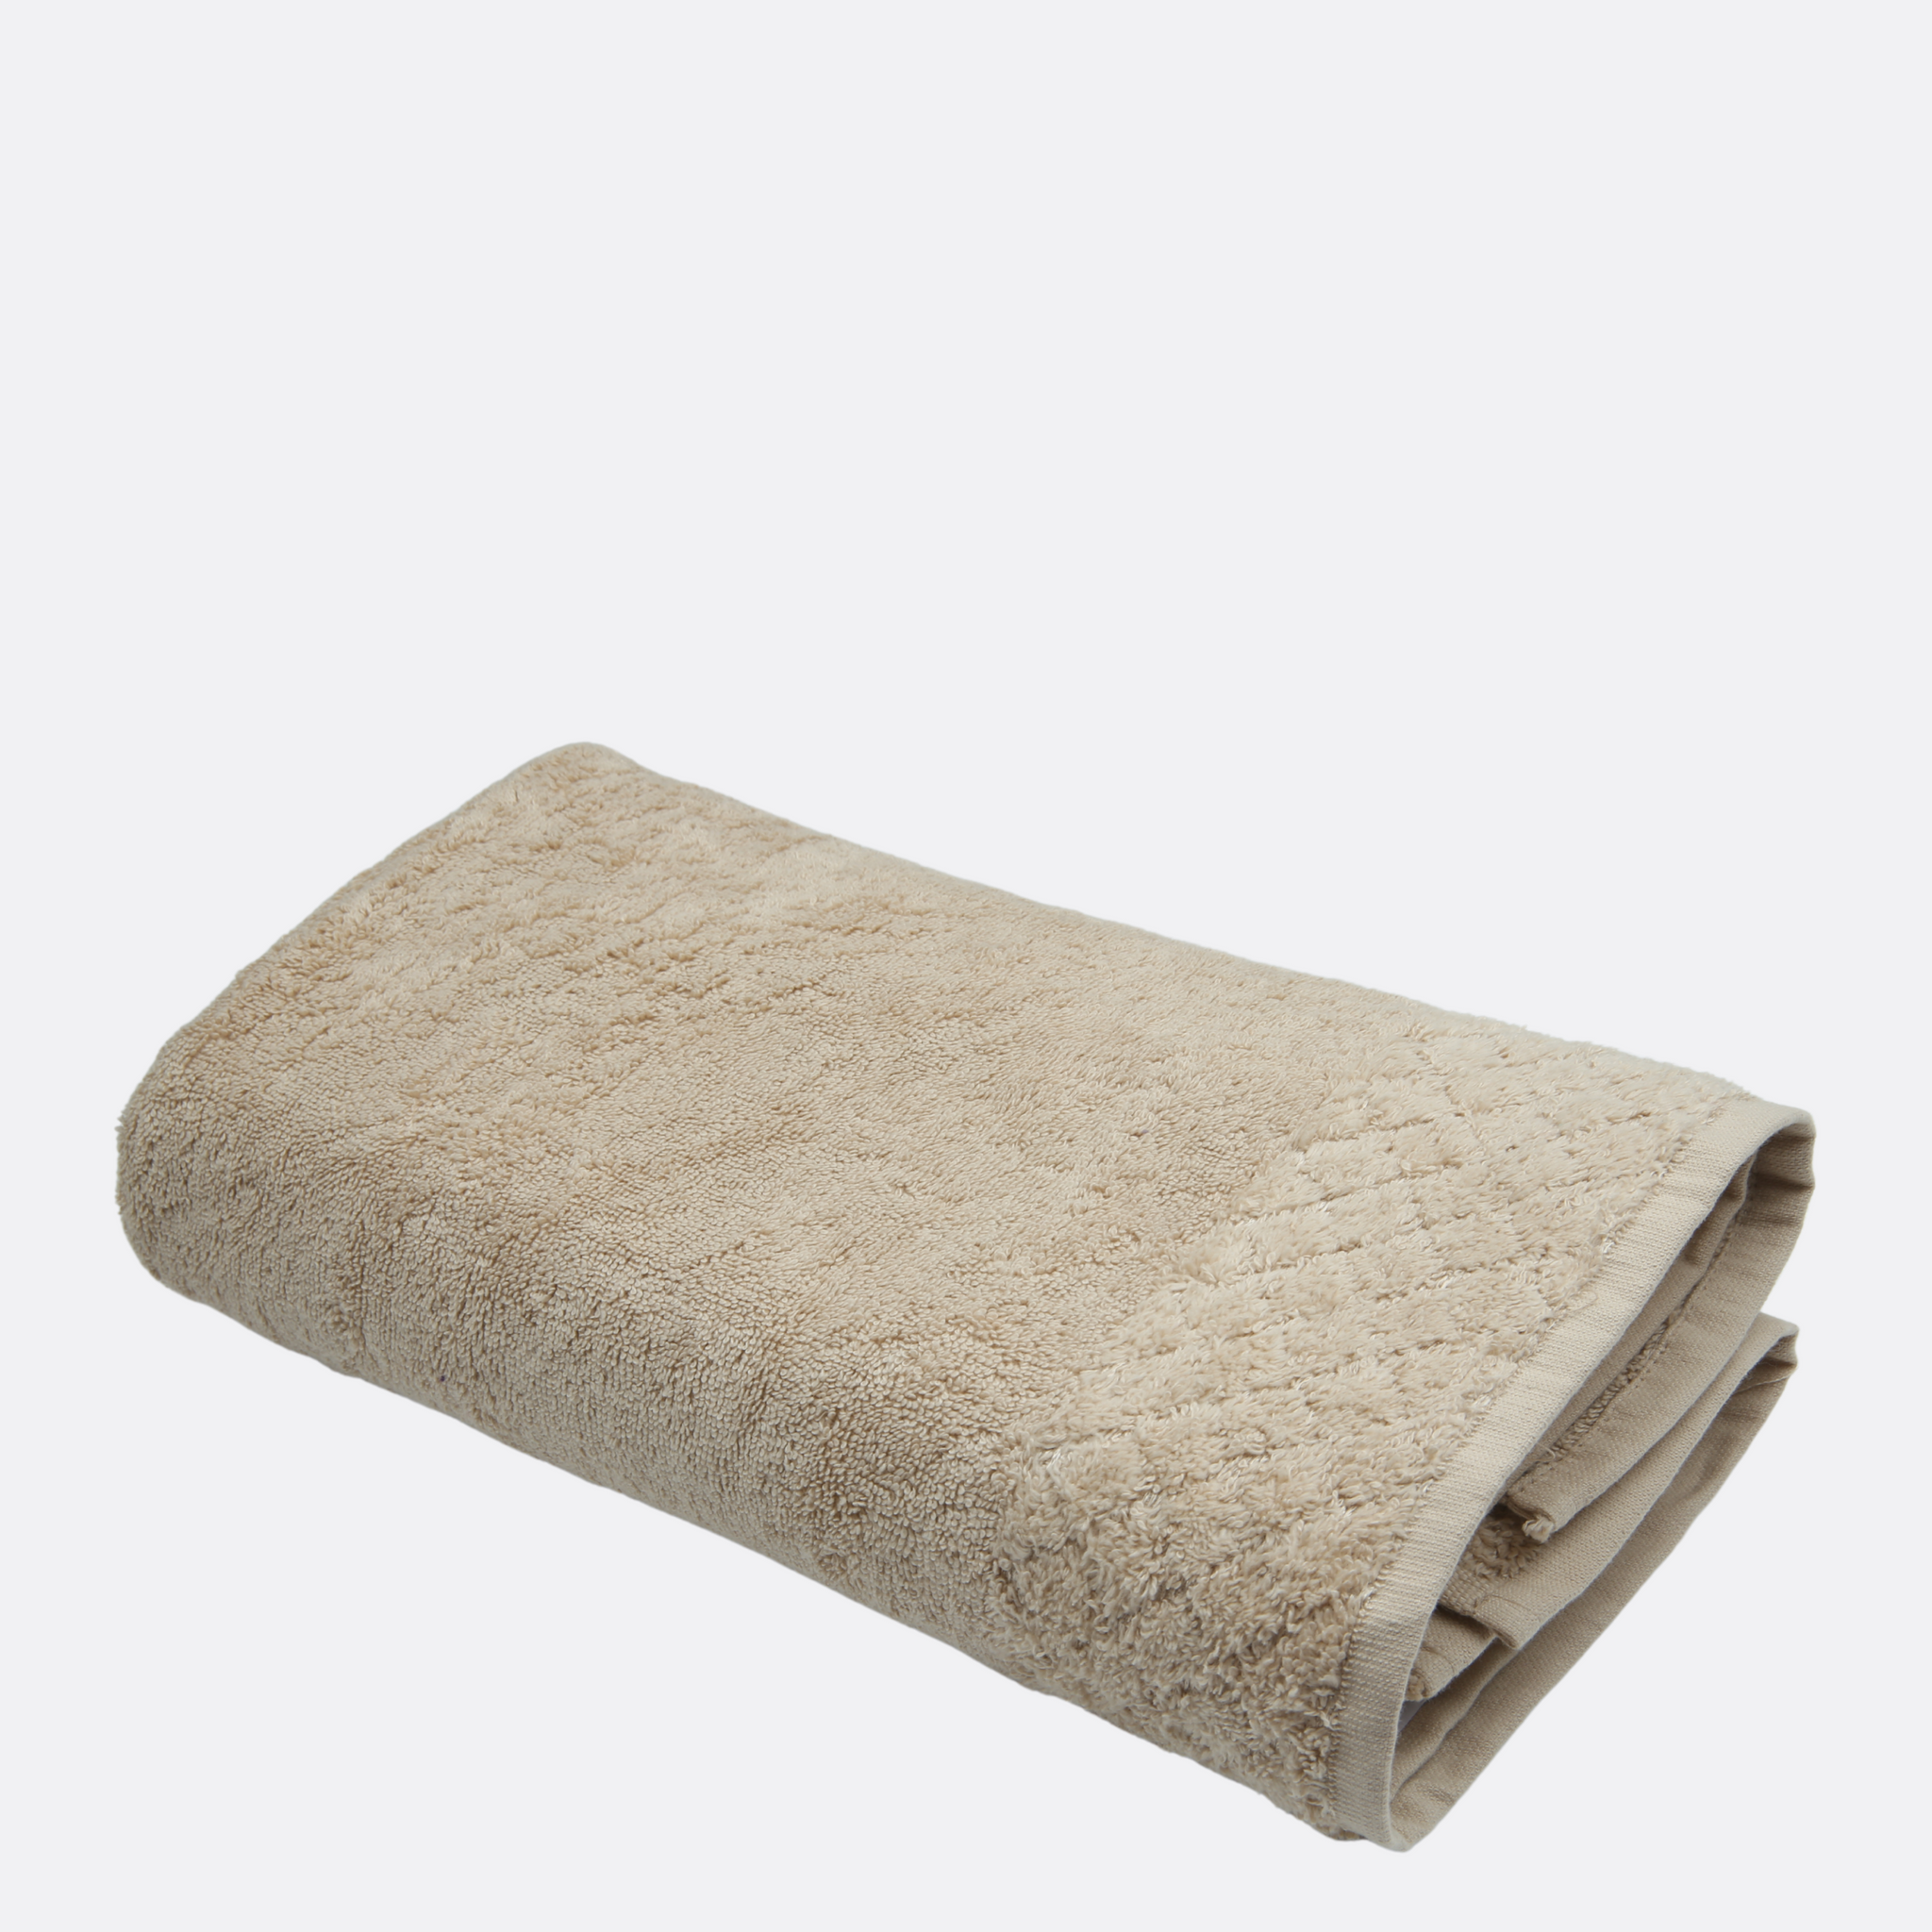 Preferable Jacquard Towel